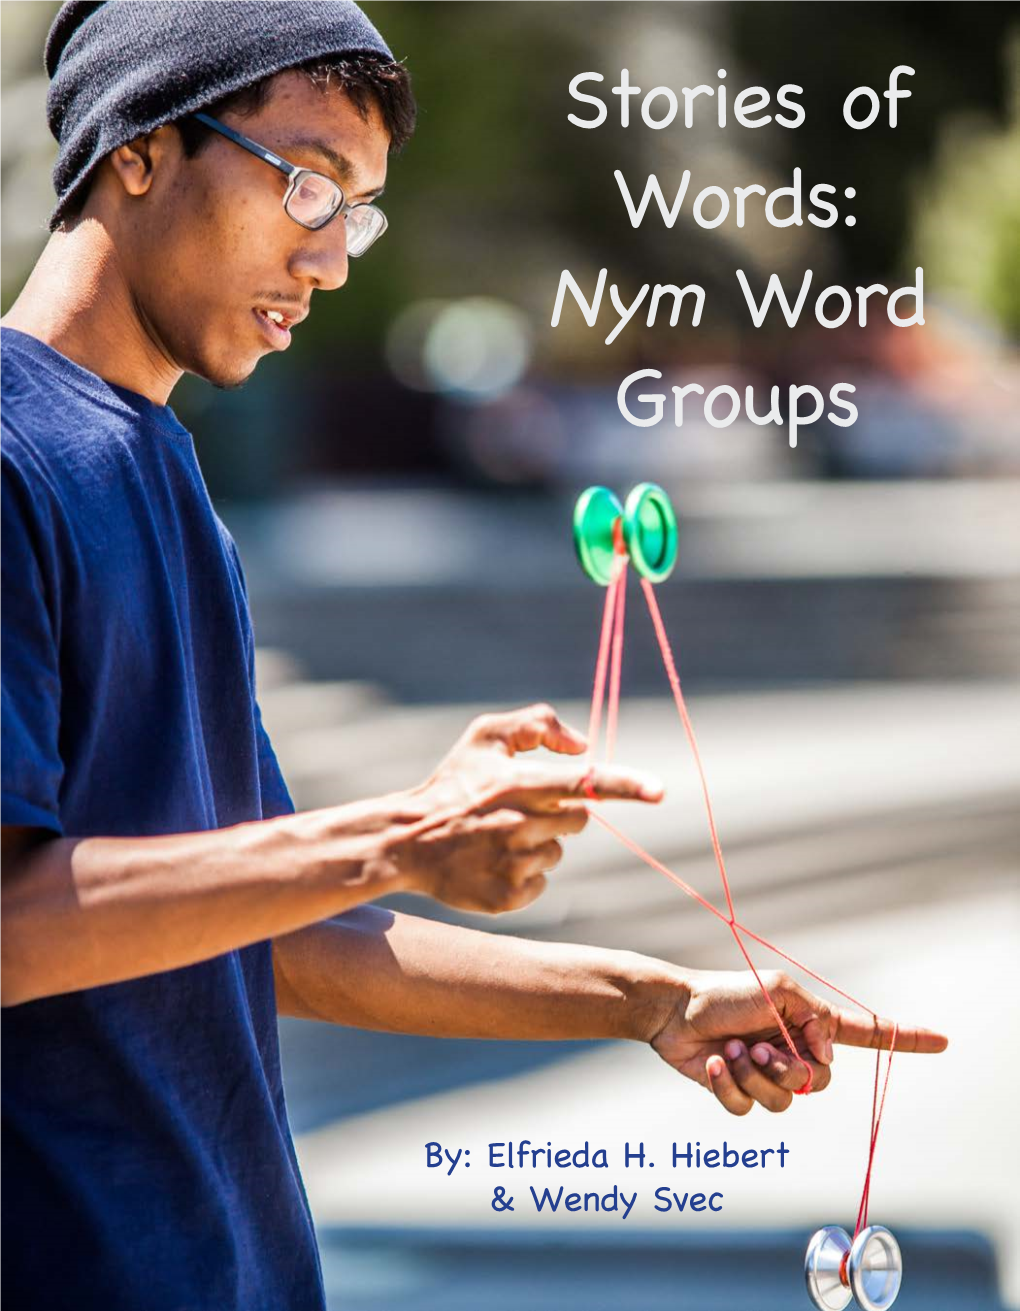 Nym Word Groups